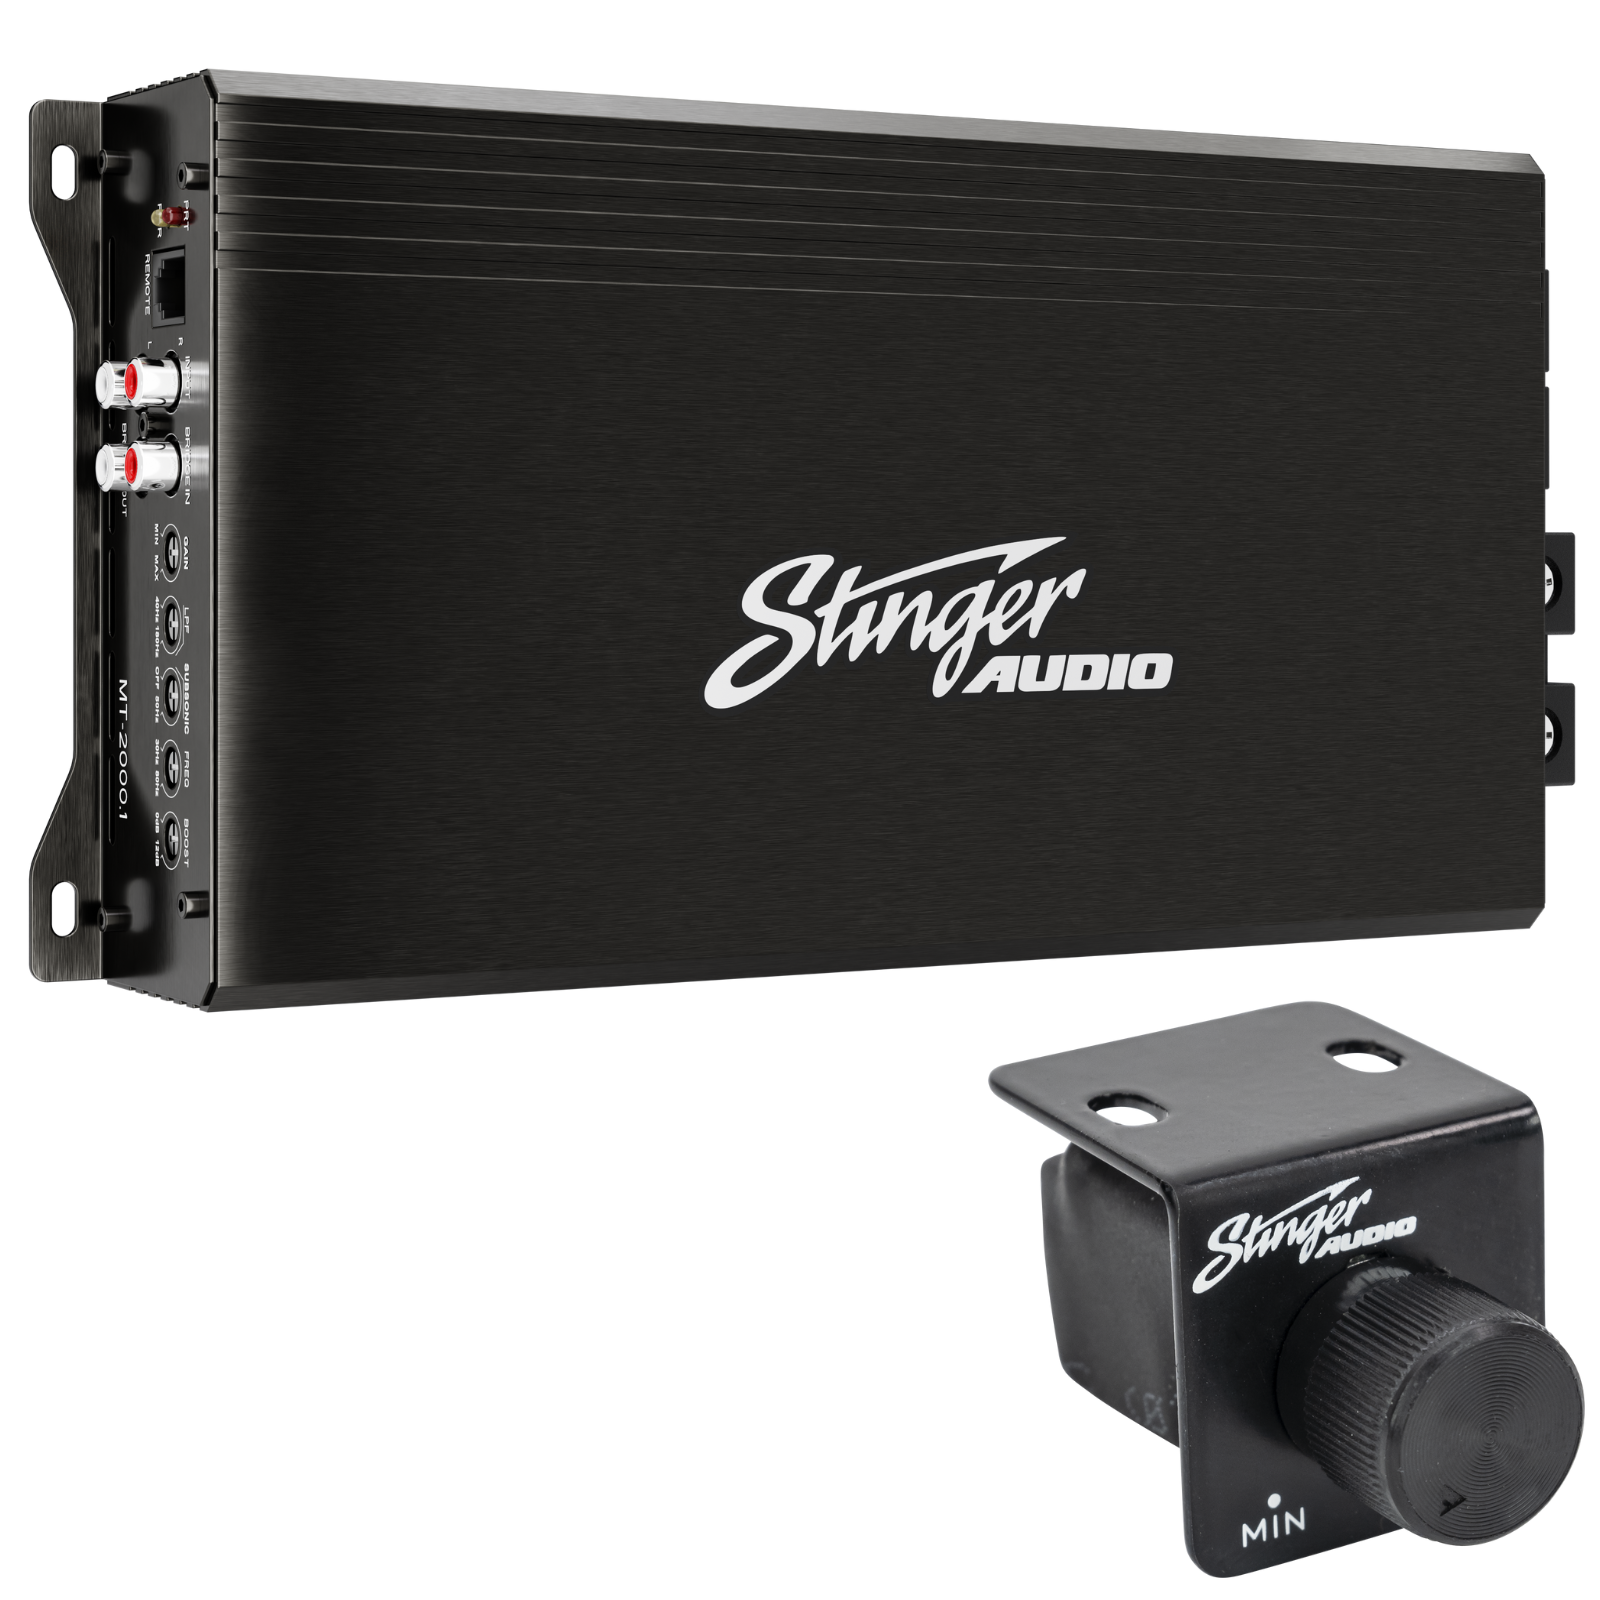 Stinger Audio MT-2000.1 2,000 Watt (RMS) Class D Monoblock Car Audio Amplifier